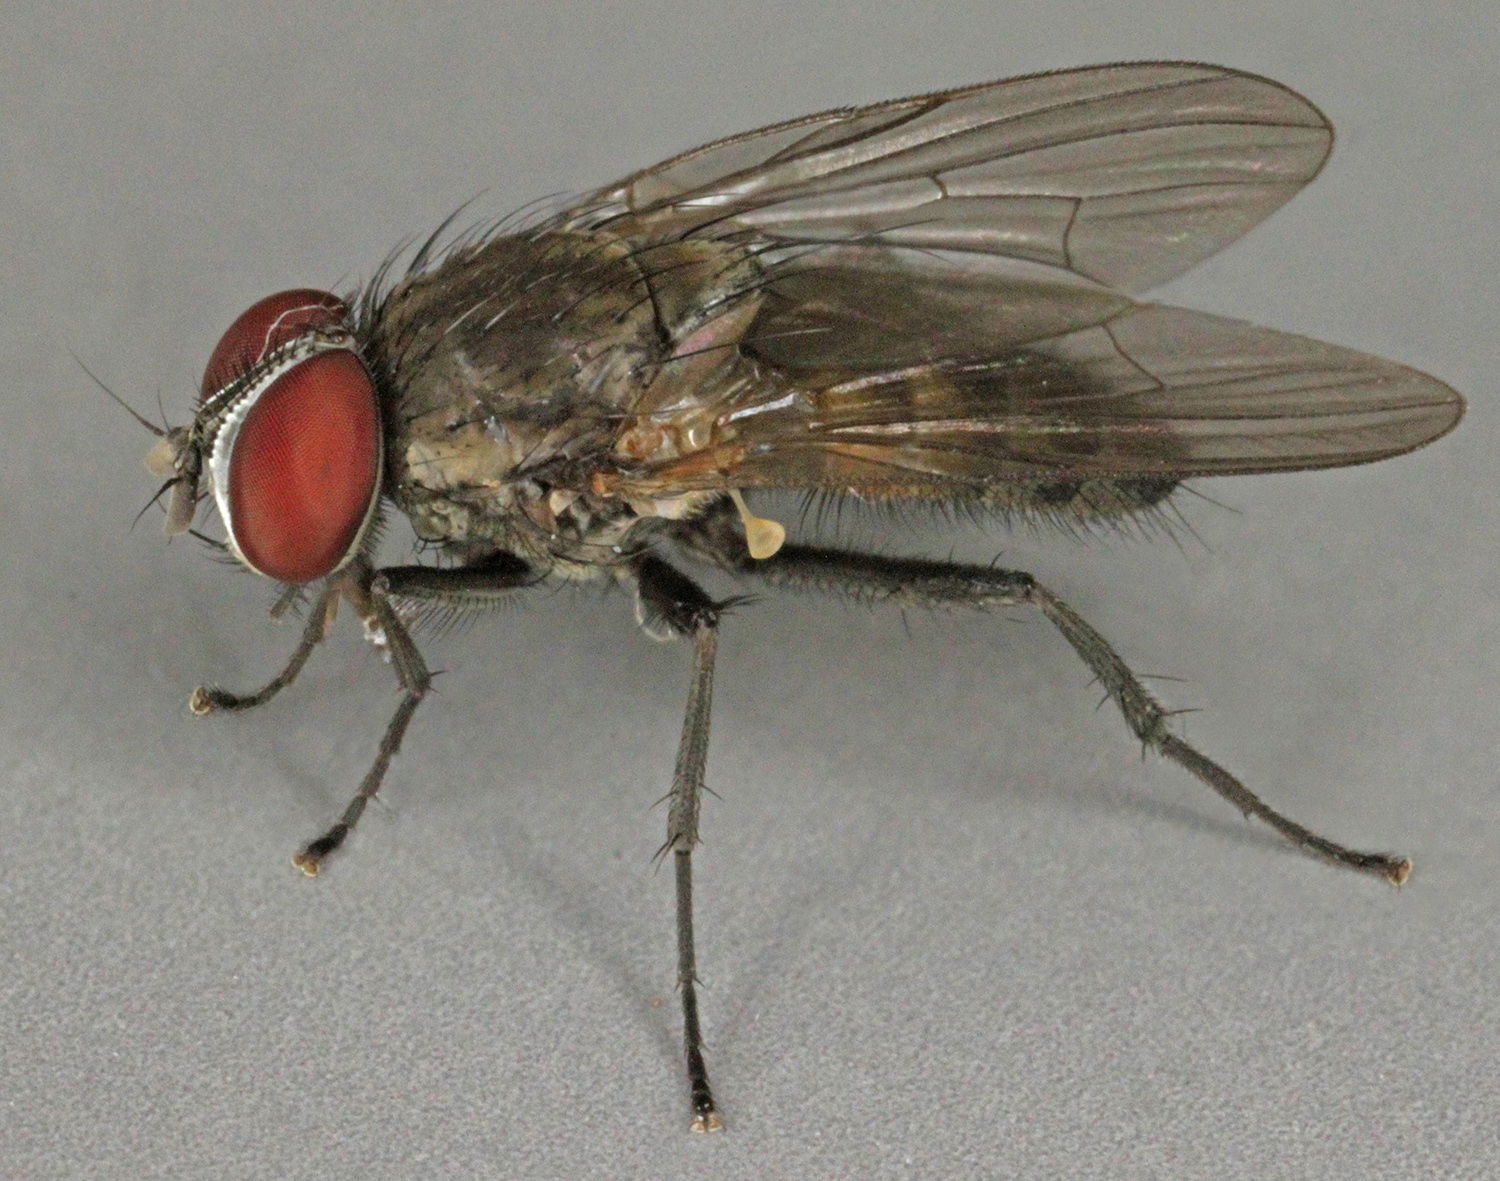 small flies not fruit flies in house